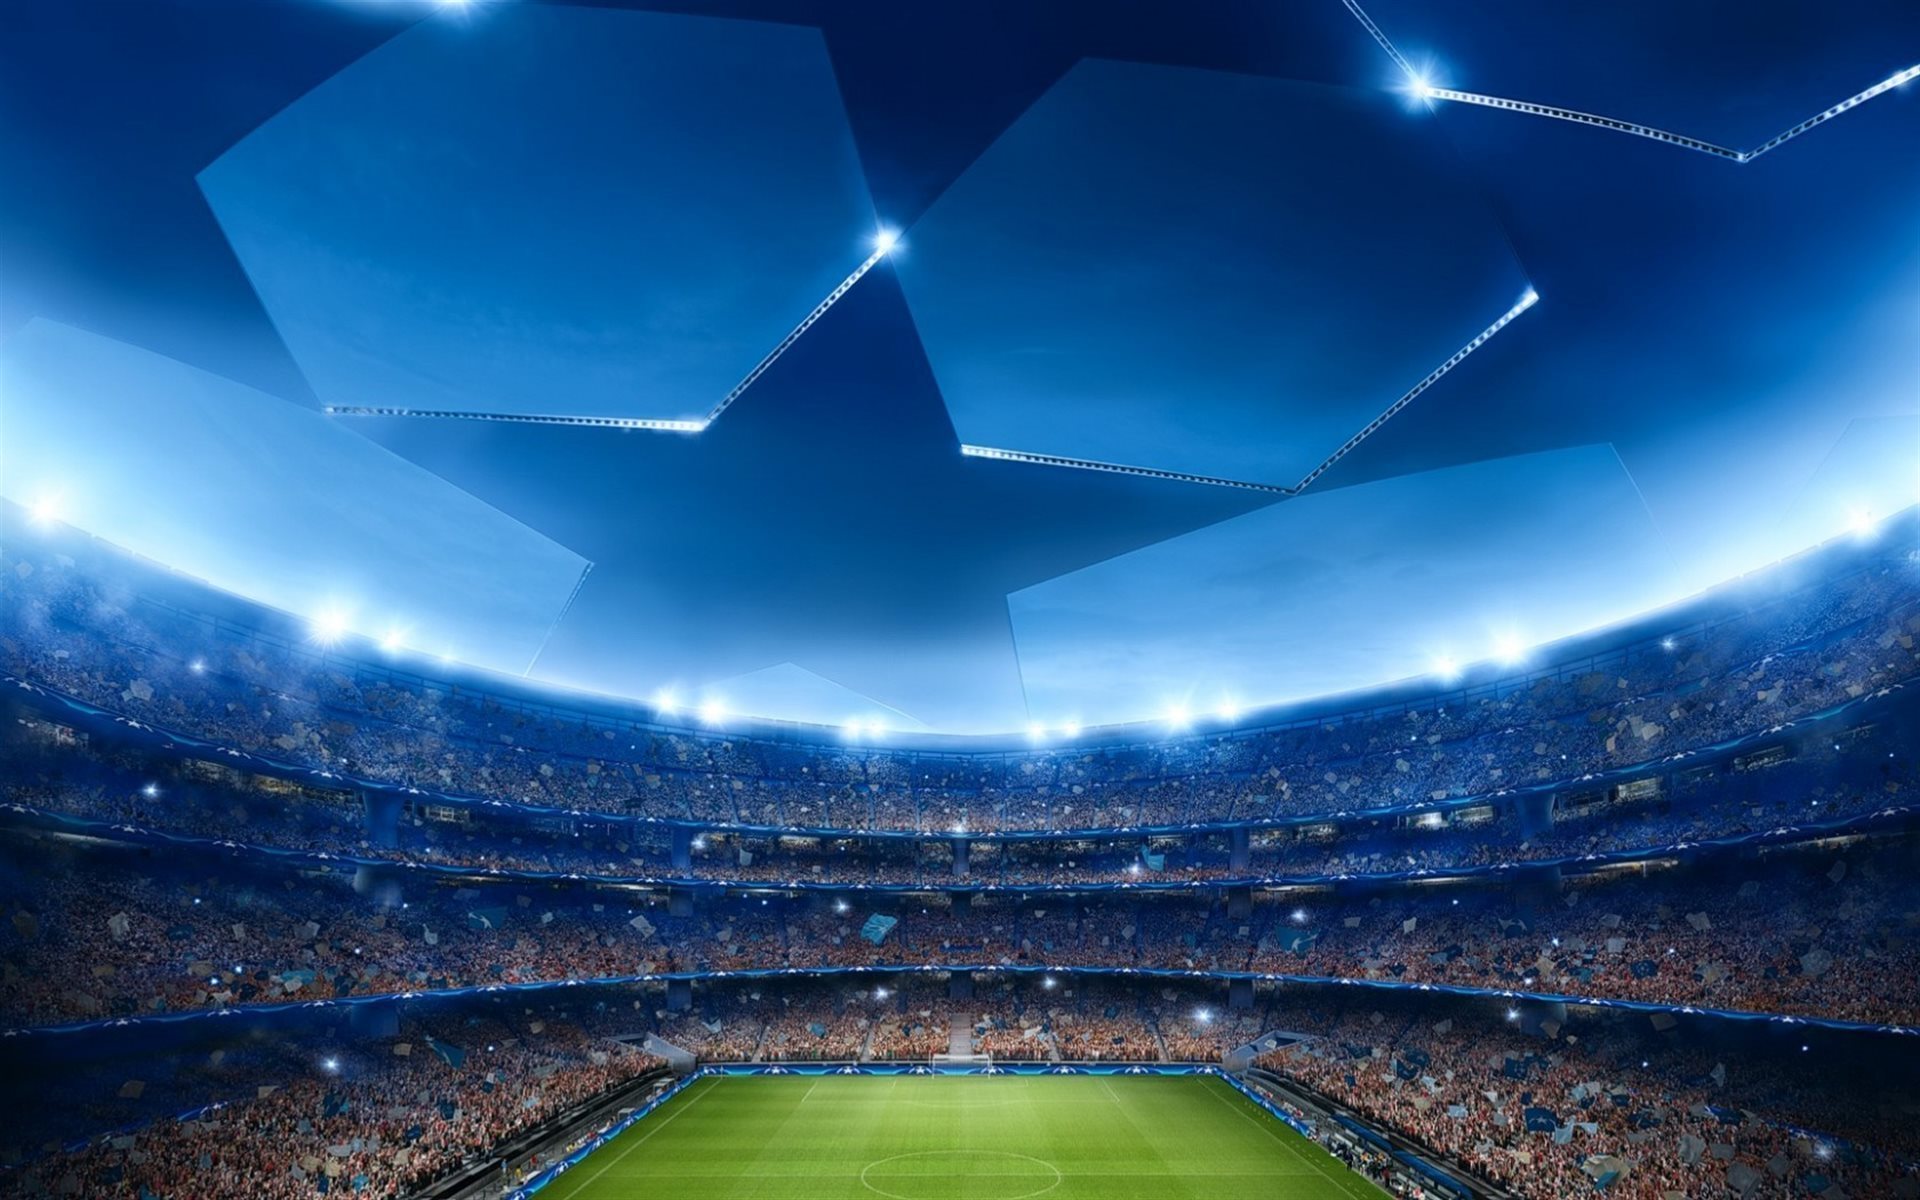 Champions League Stadiums